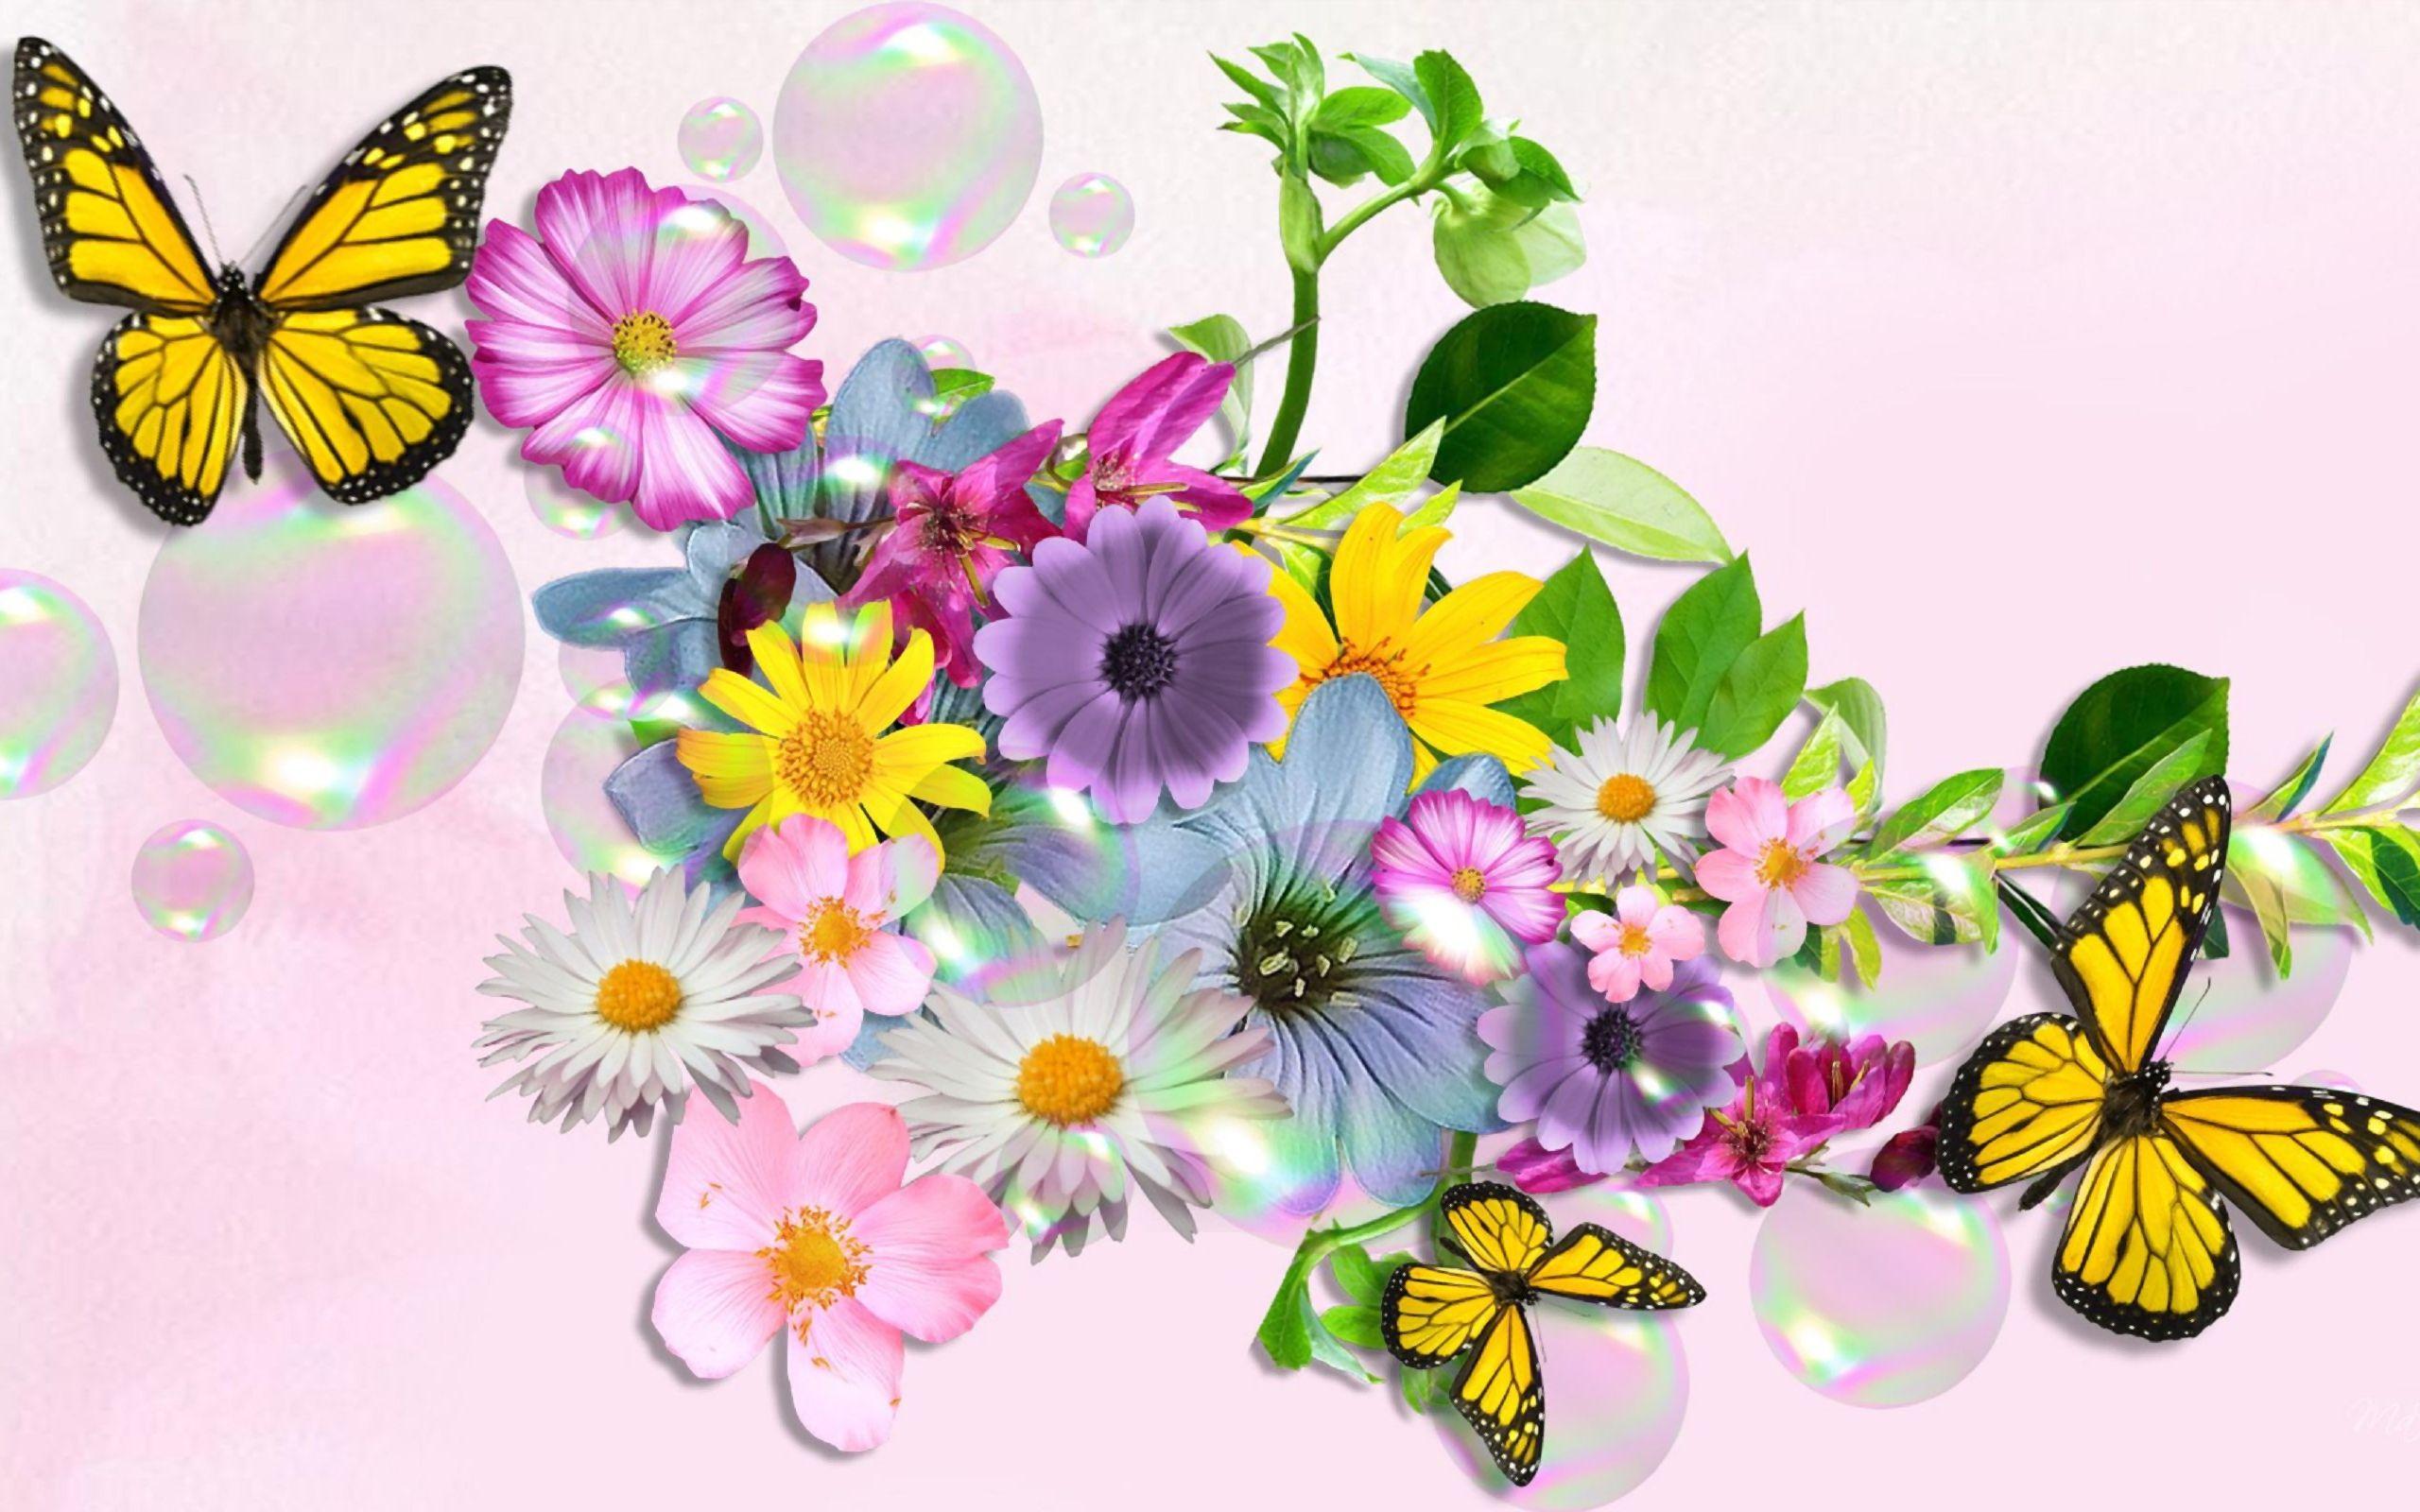 Flowers and Butterflies Full HD Wallpaper